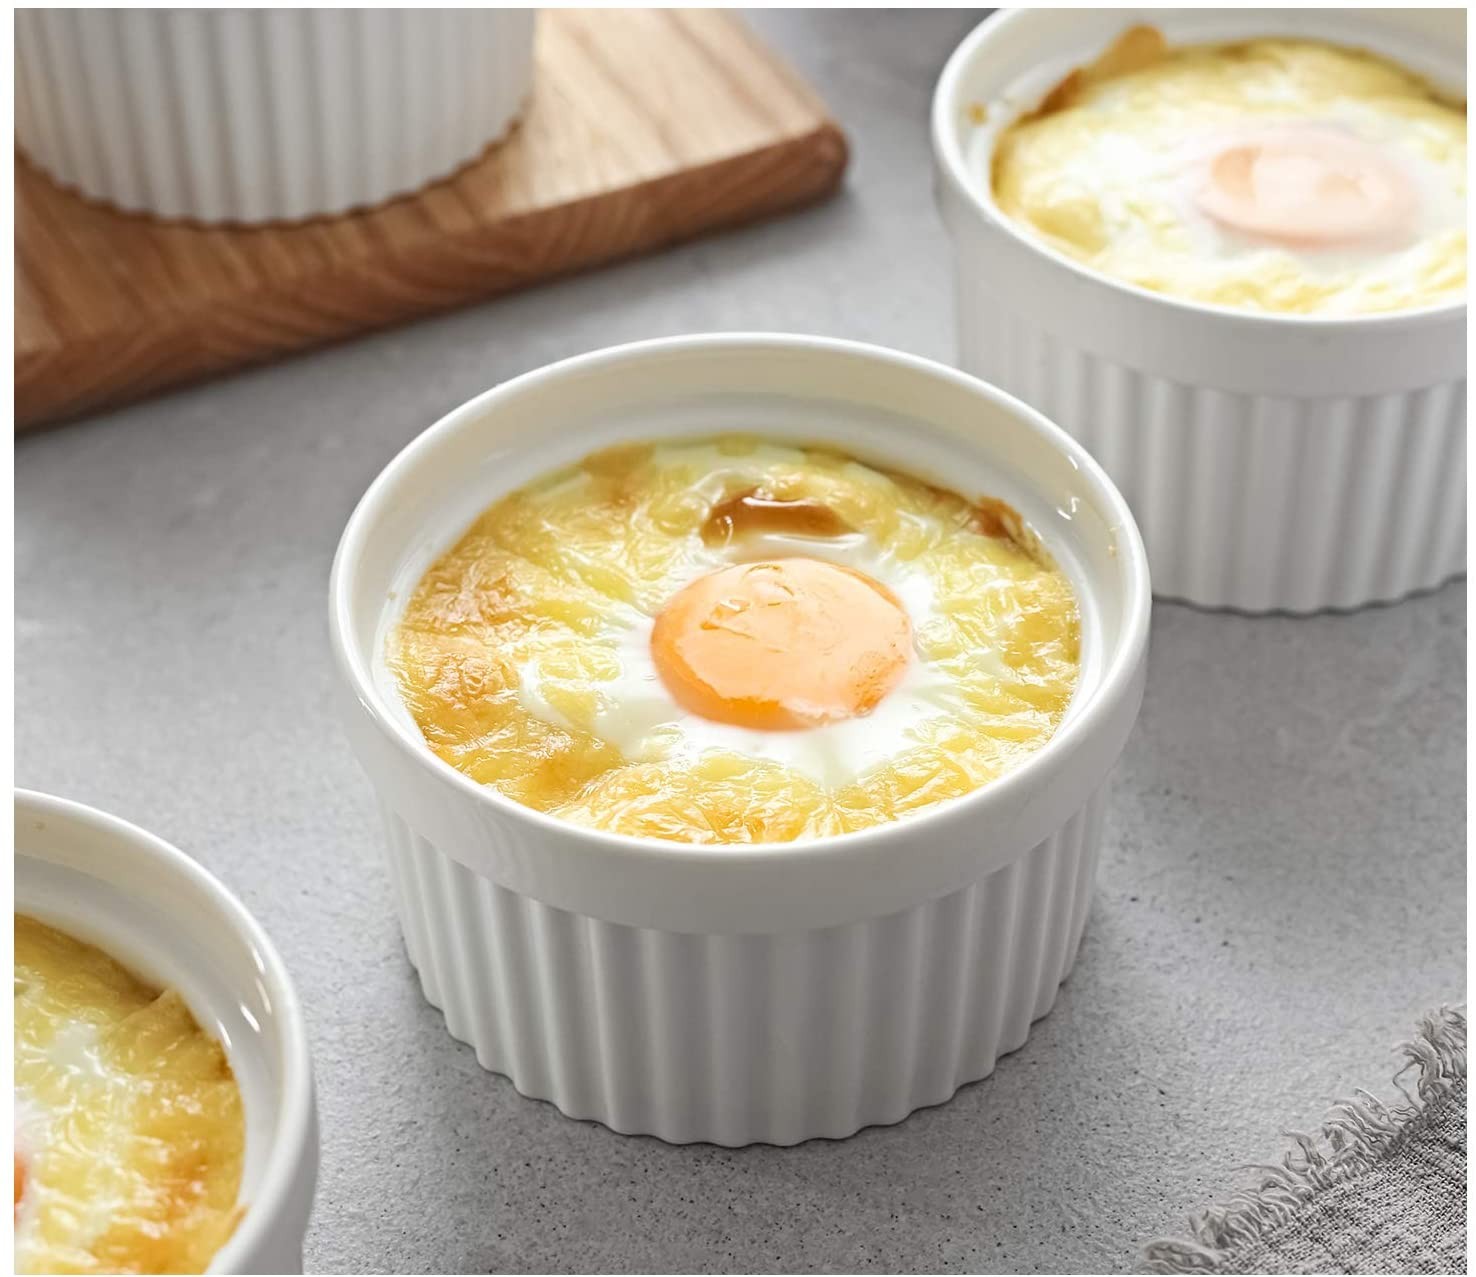 A ramekin with cooked egg inside